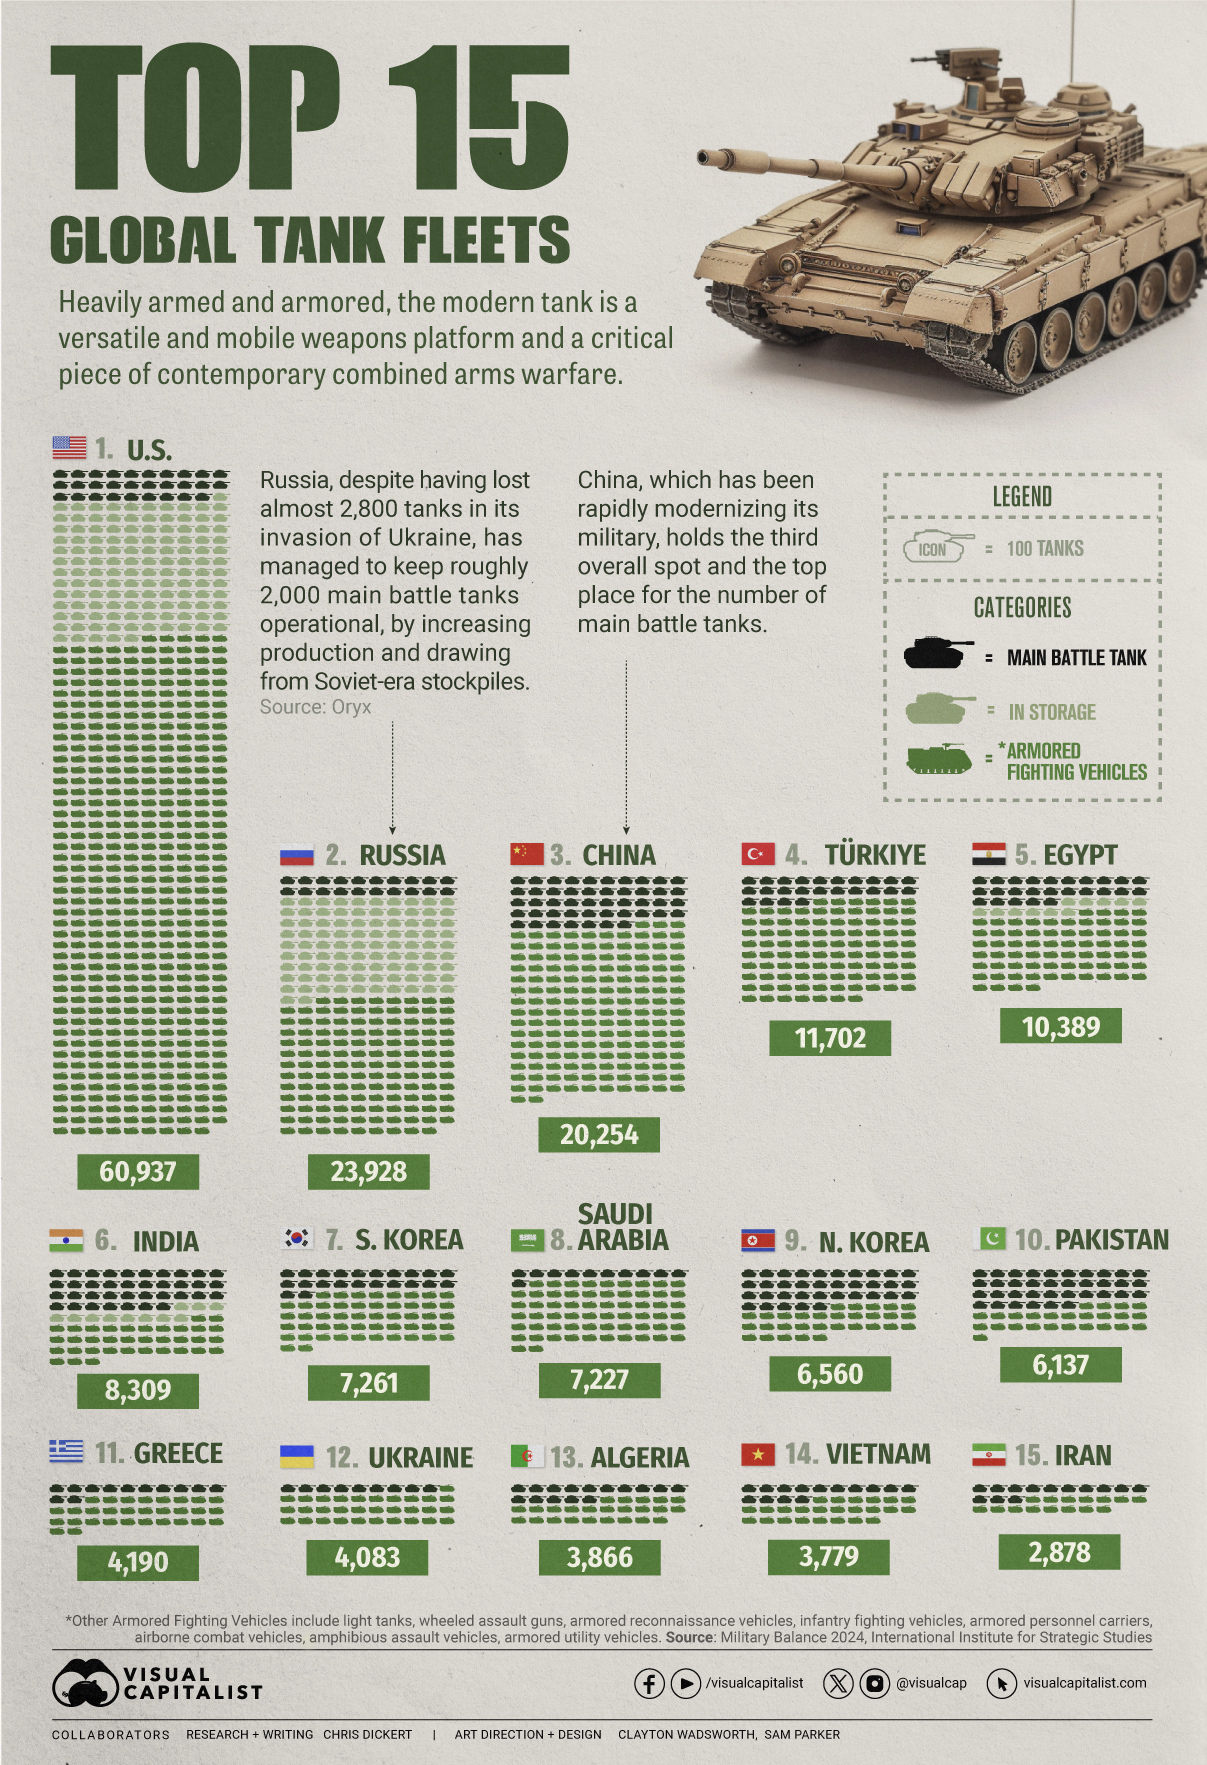 Top 15 Global Tank Fleets, Visualized